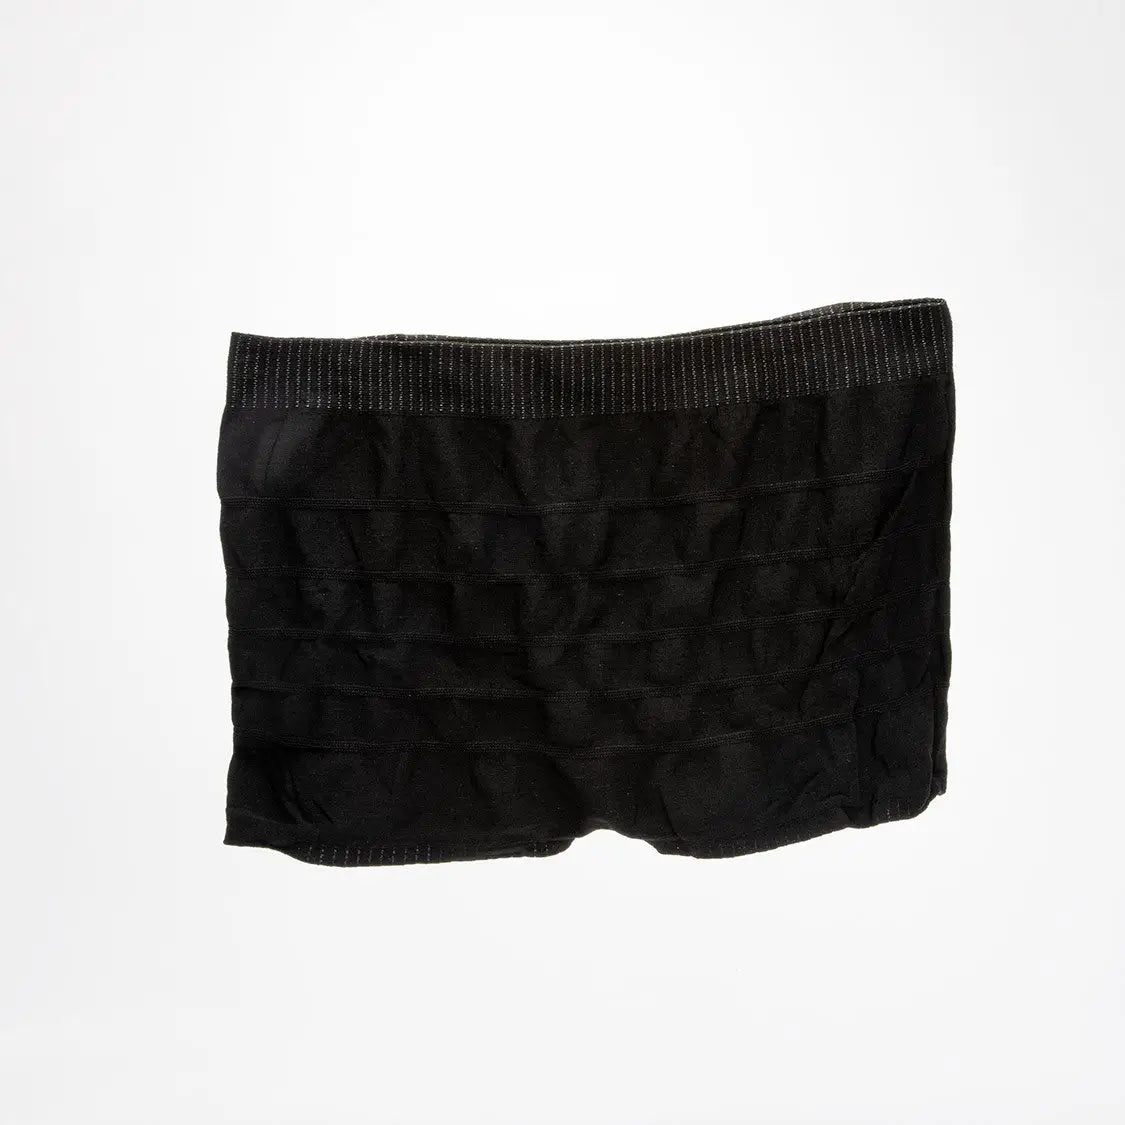 Single) Postpartum Mesh underwear – It's Apparent